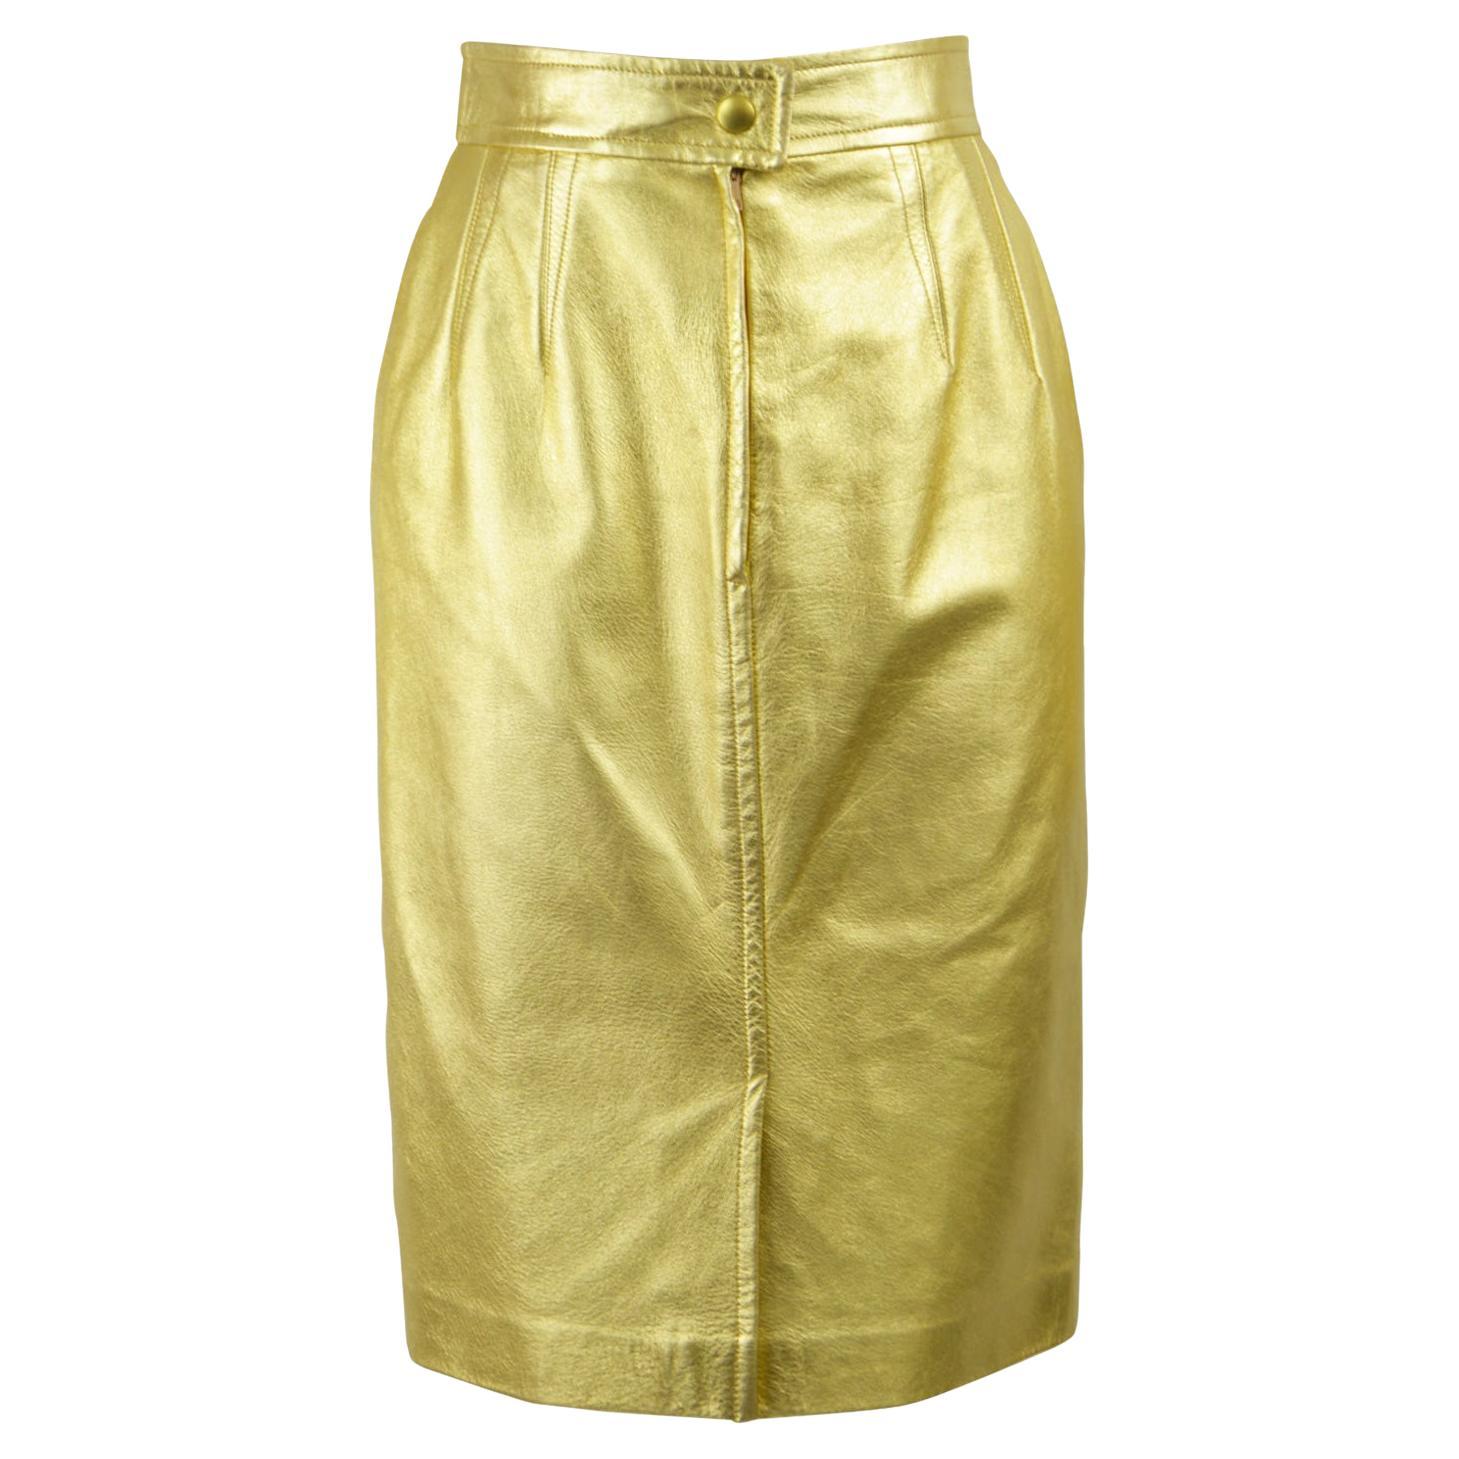 Escada Vintage Metallic Gold Leather Skirt, 1990s For Sale